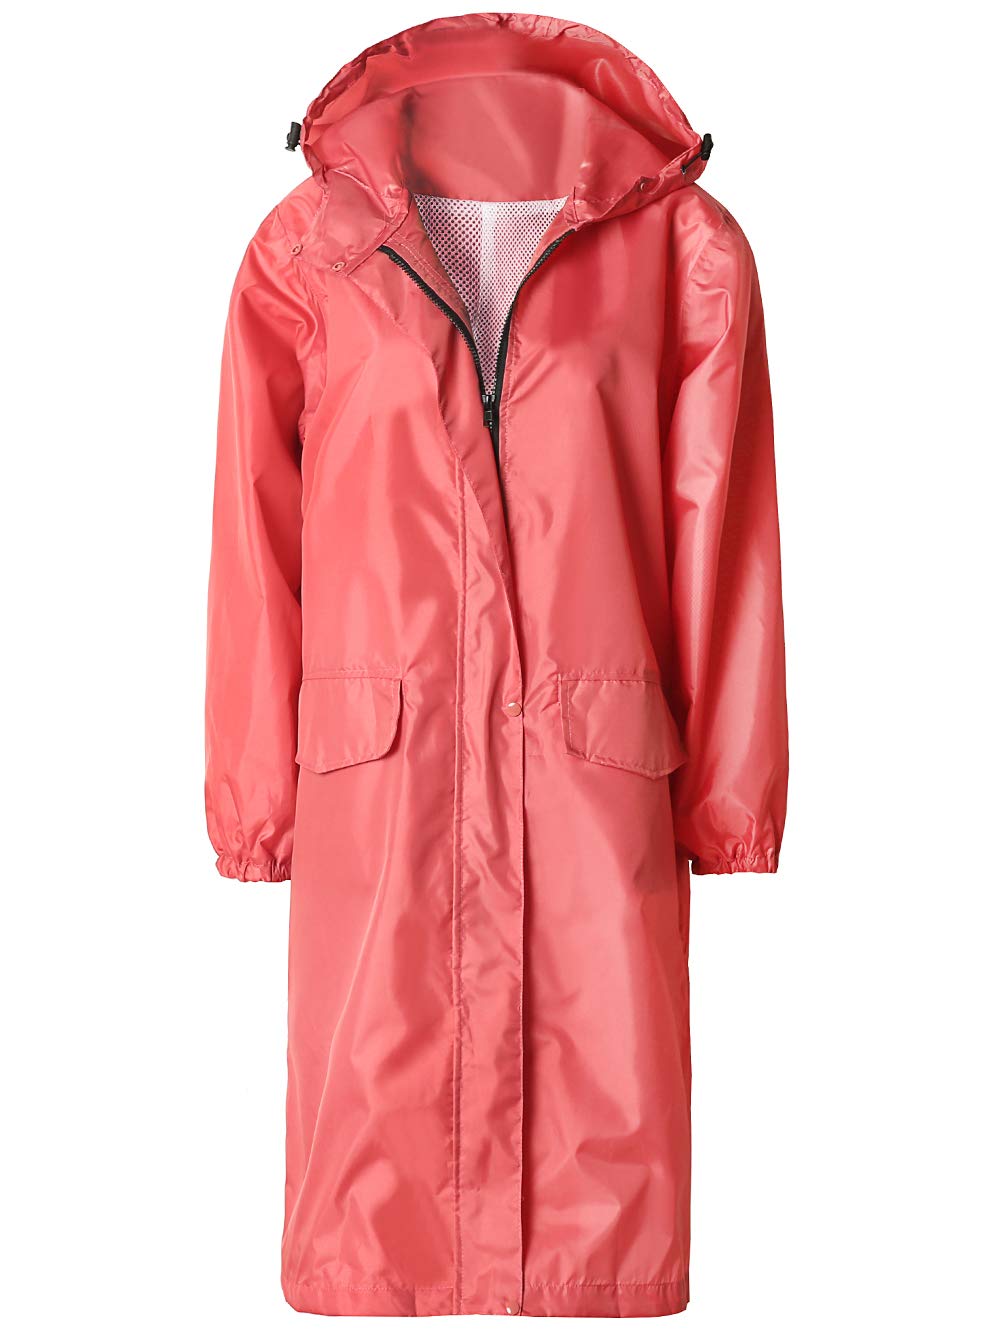 women's waterproof raincoat with hood